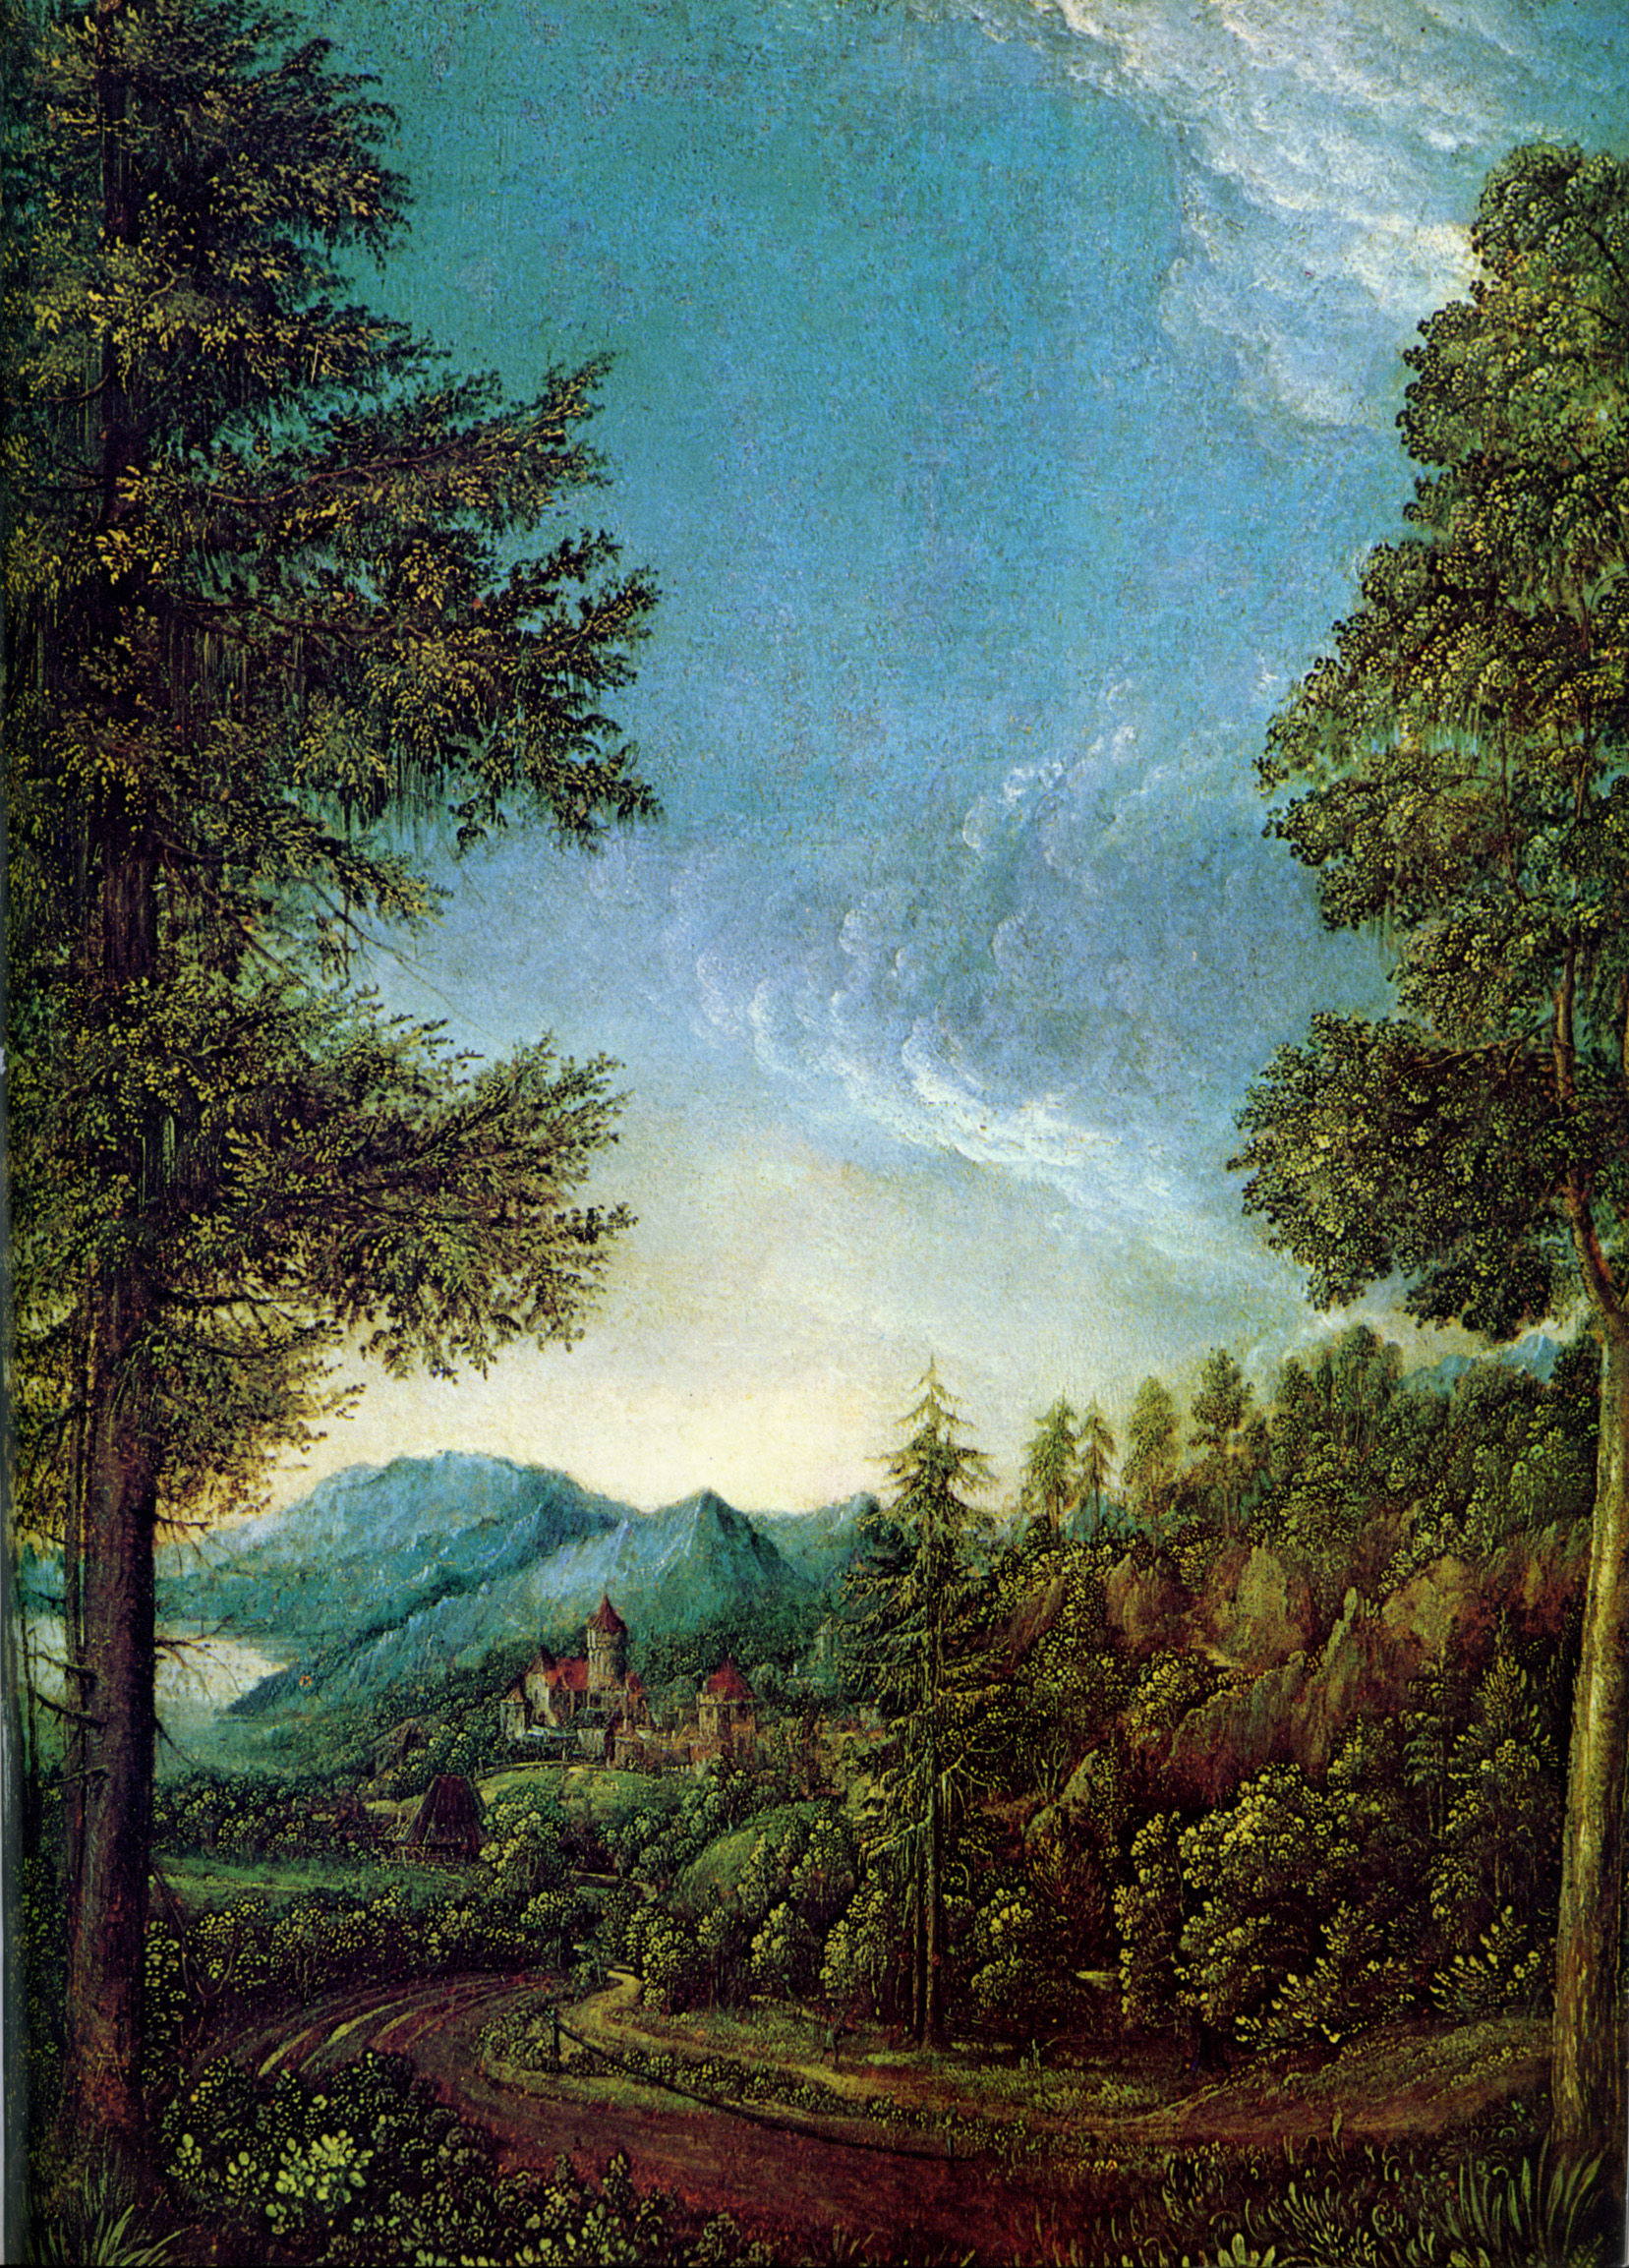 Albrecht Altdorfer, Landscape of the Danube Near Regensburg, oil on canvas, ca. 1522-25 (Alte Pinakothek, Munich). Photo by Rainer Zenz, Public Domain.